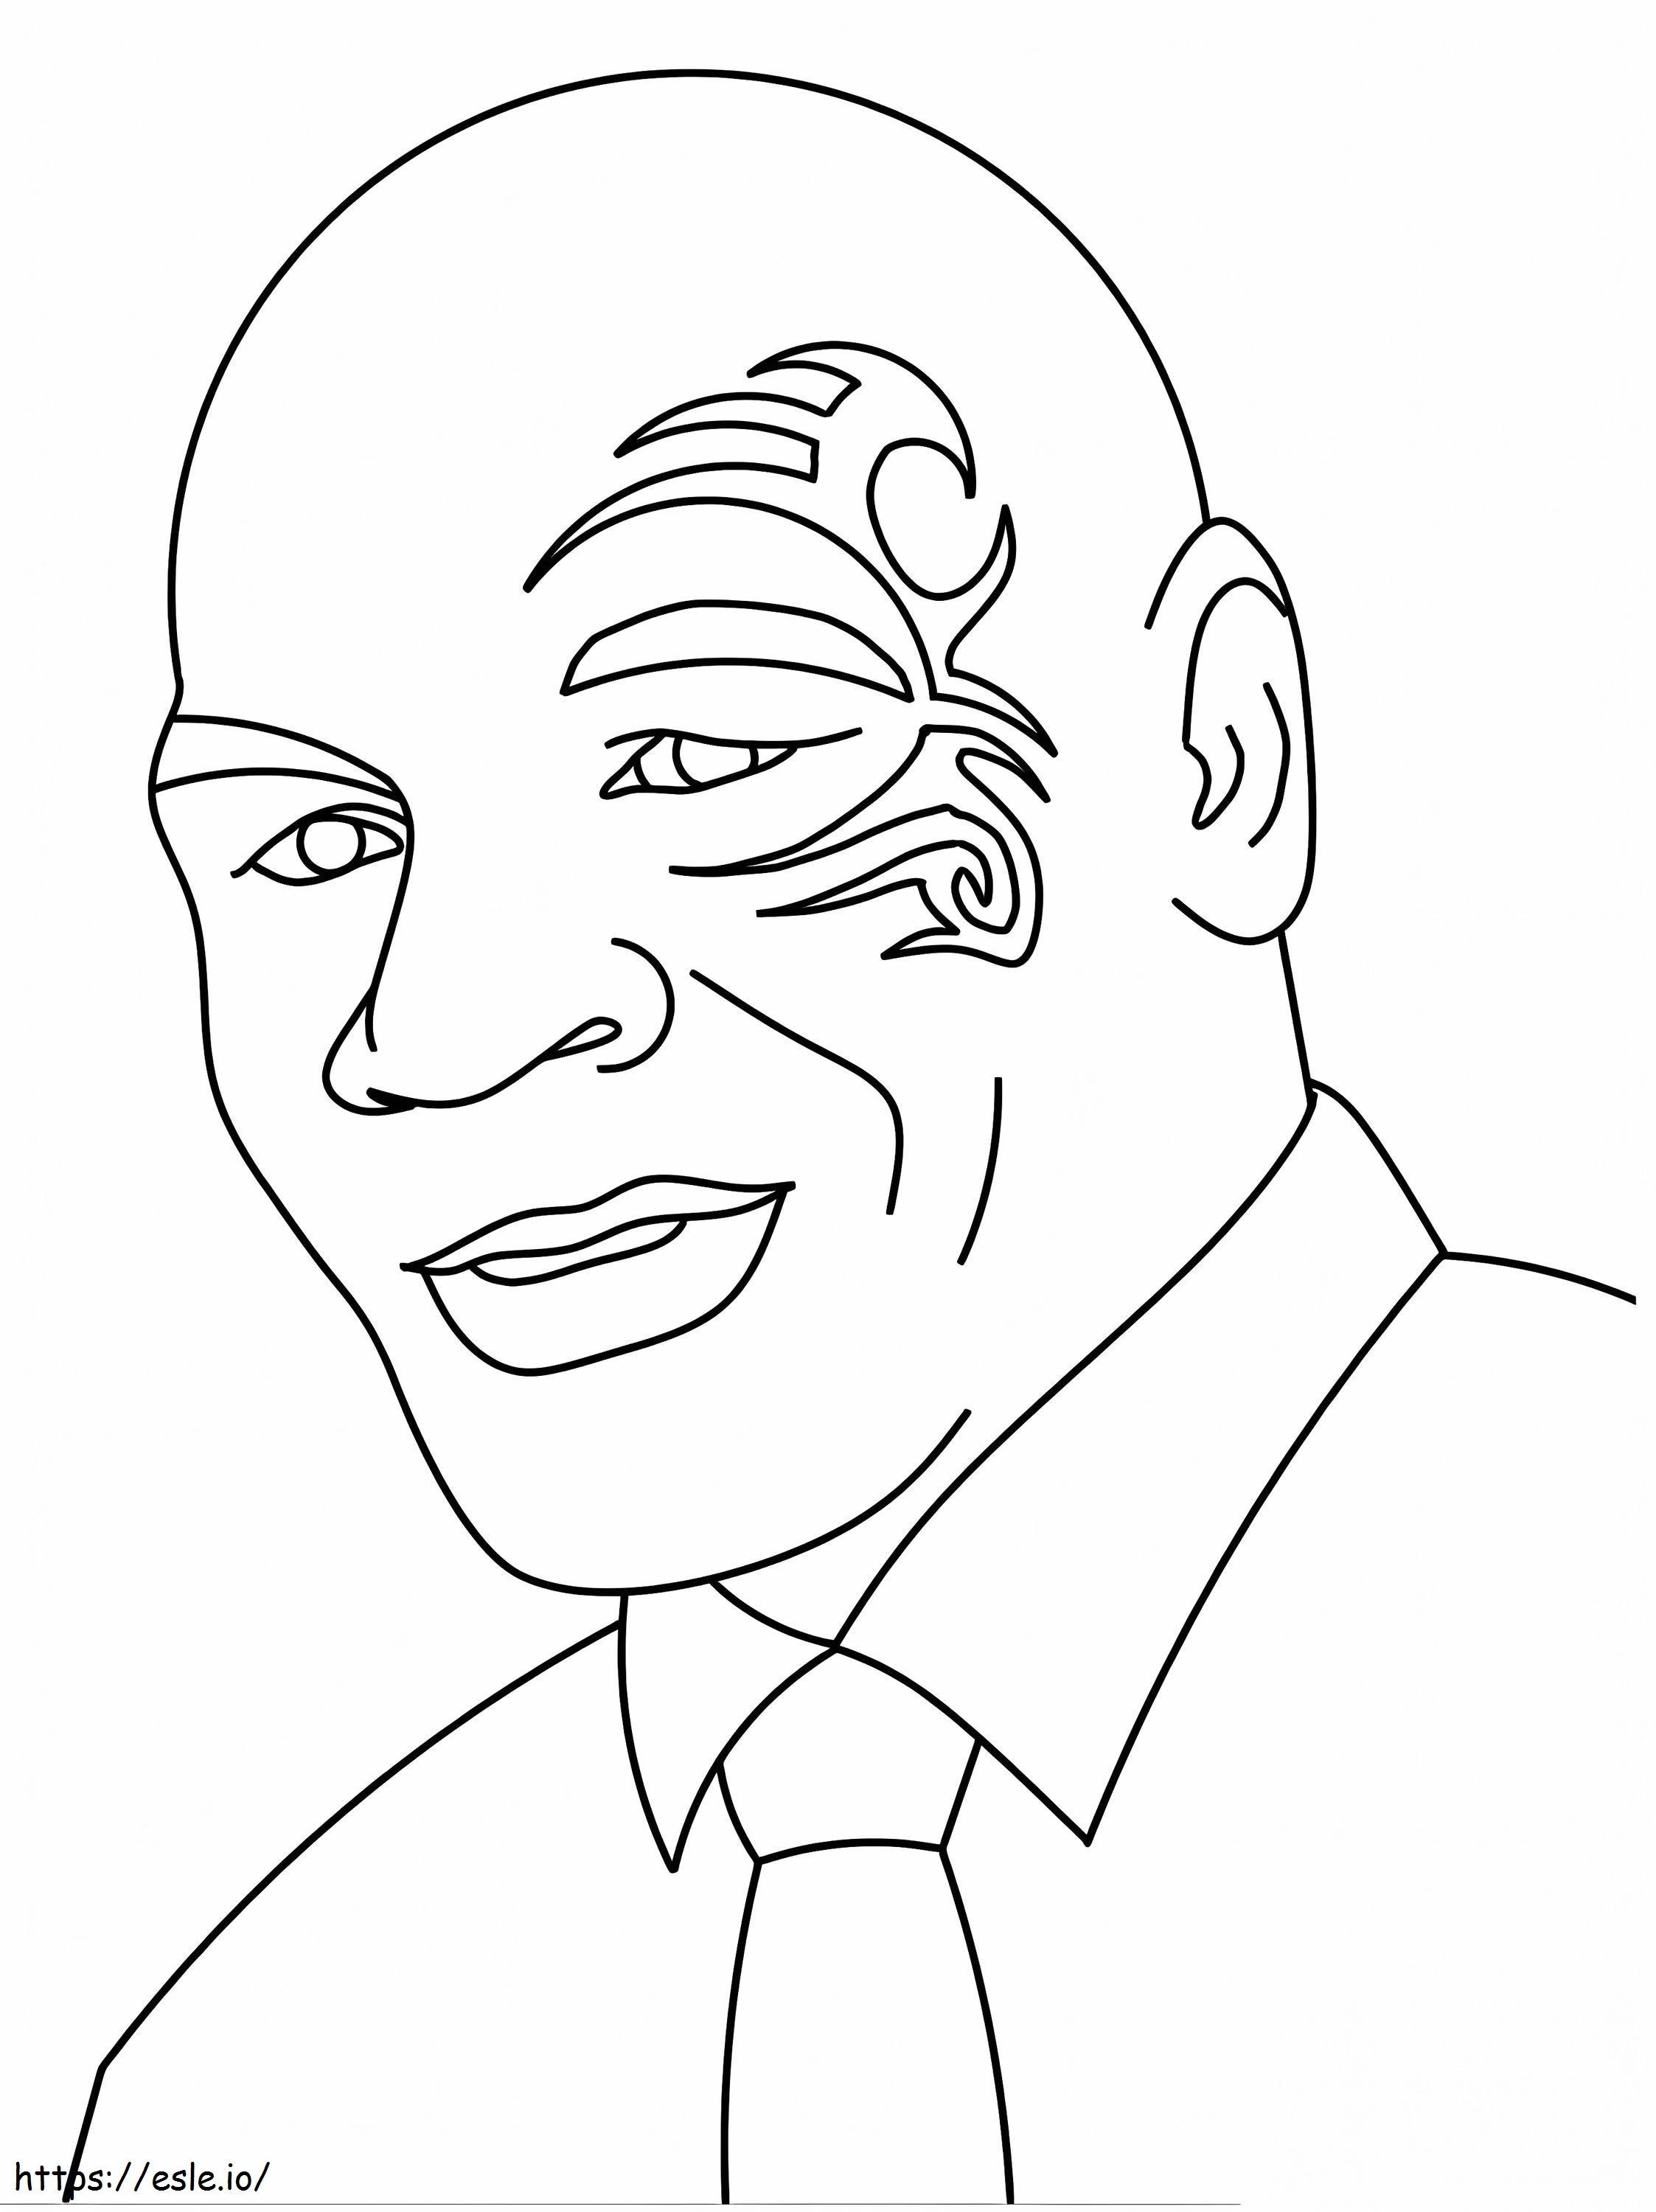 Gelukkig Mike Tyson kleurplaat kleurplaat